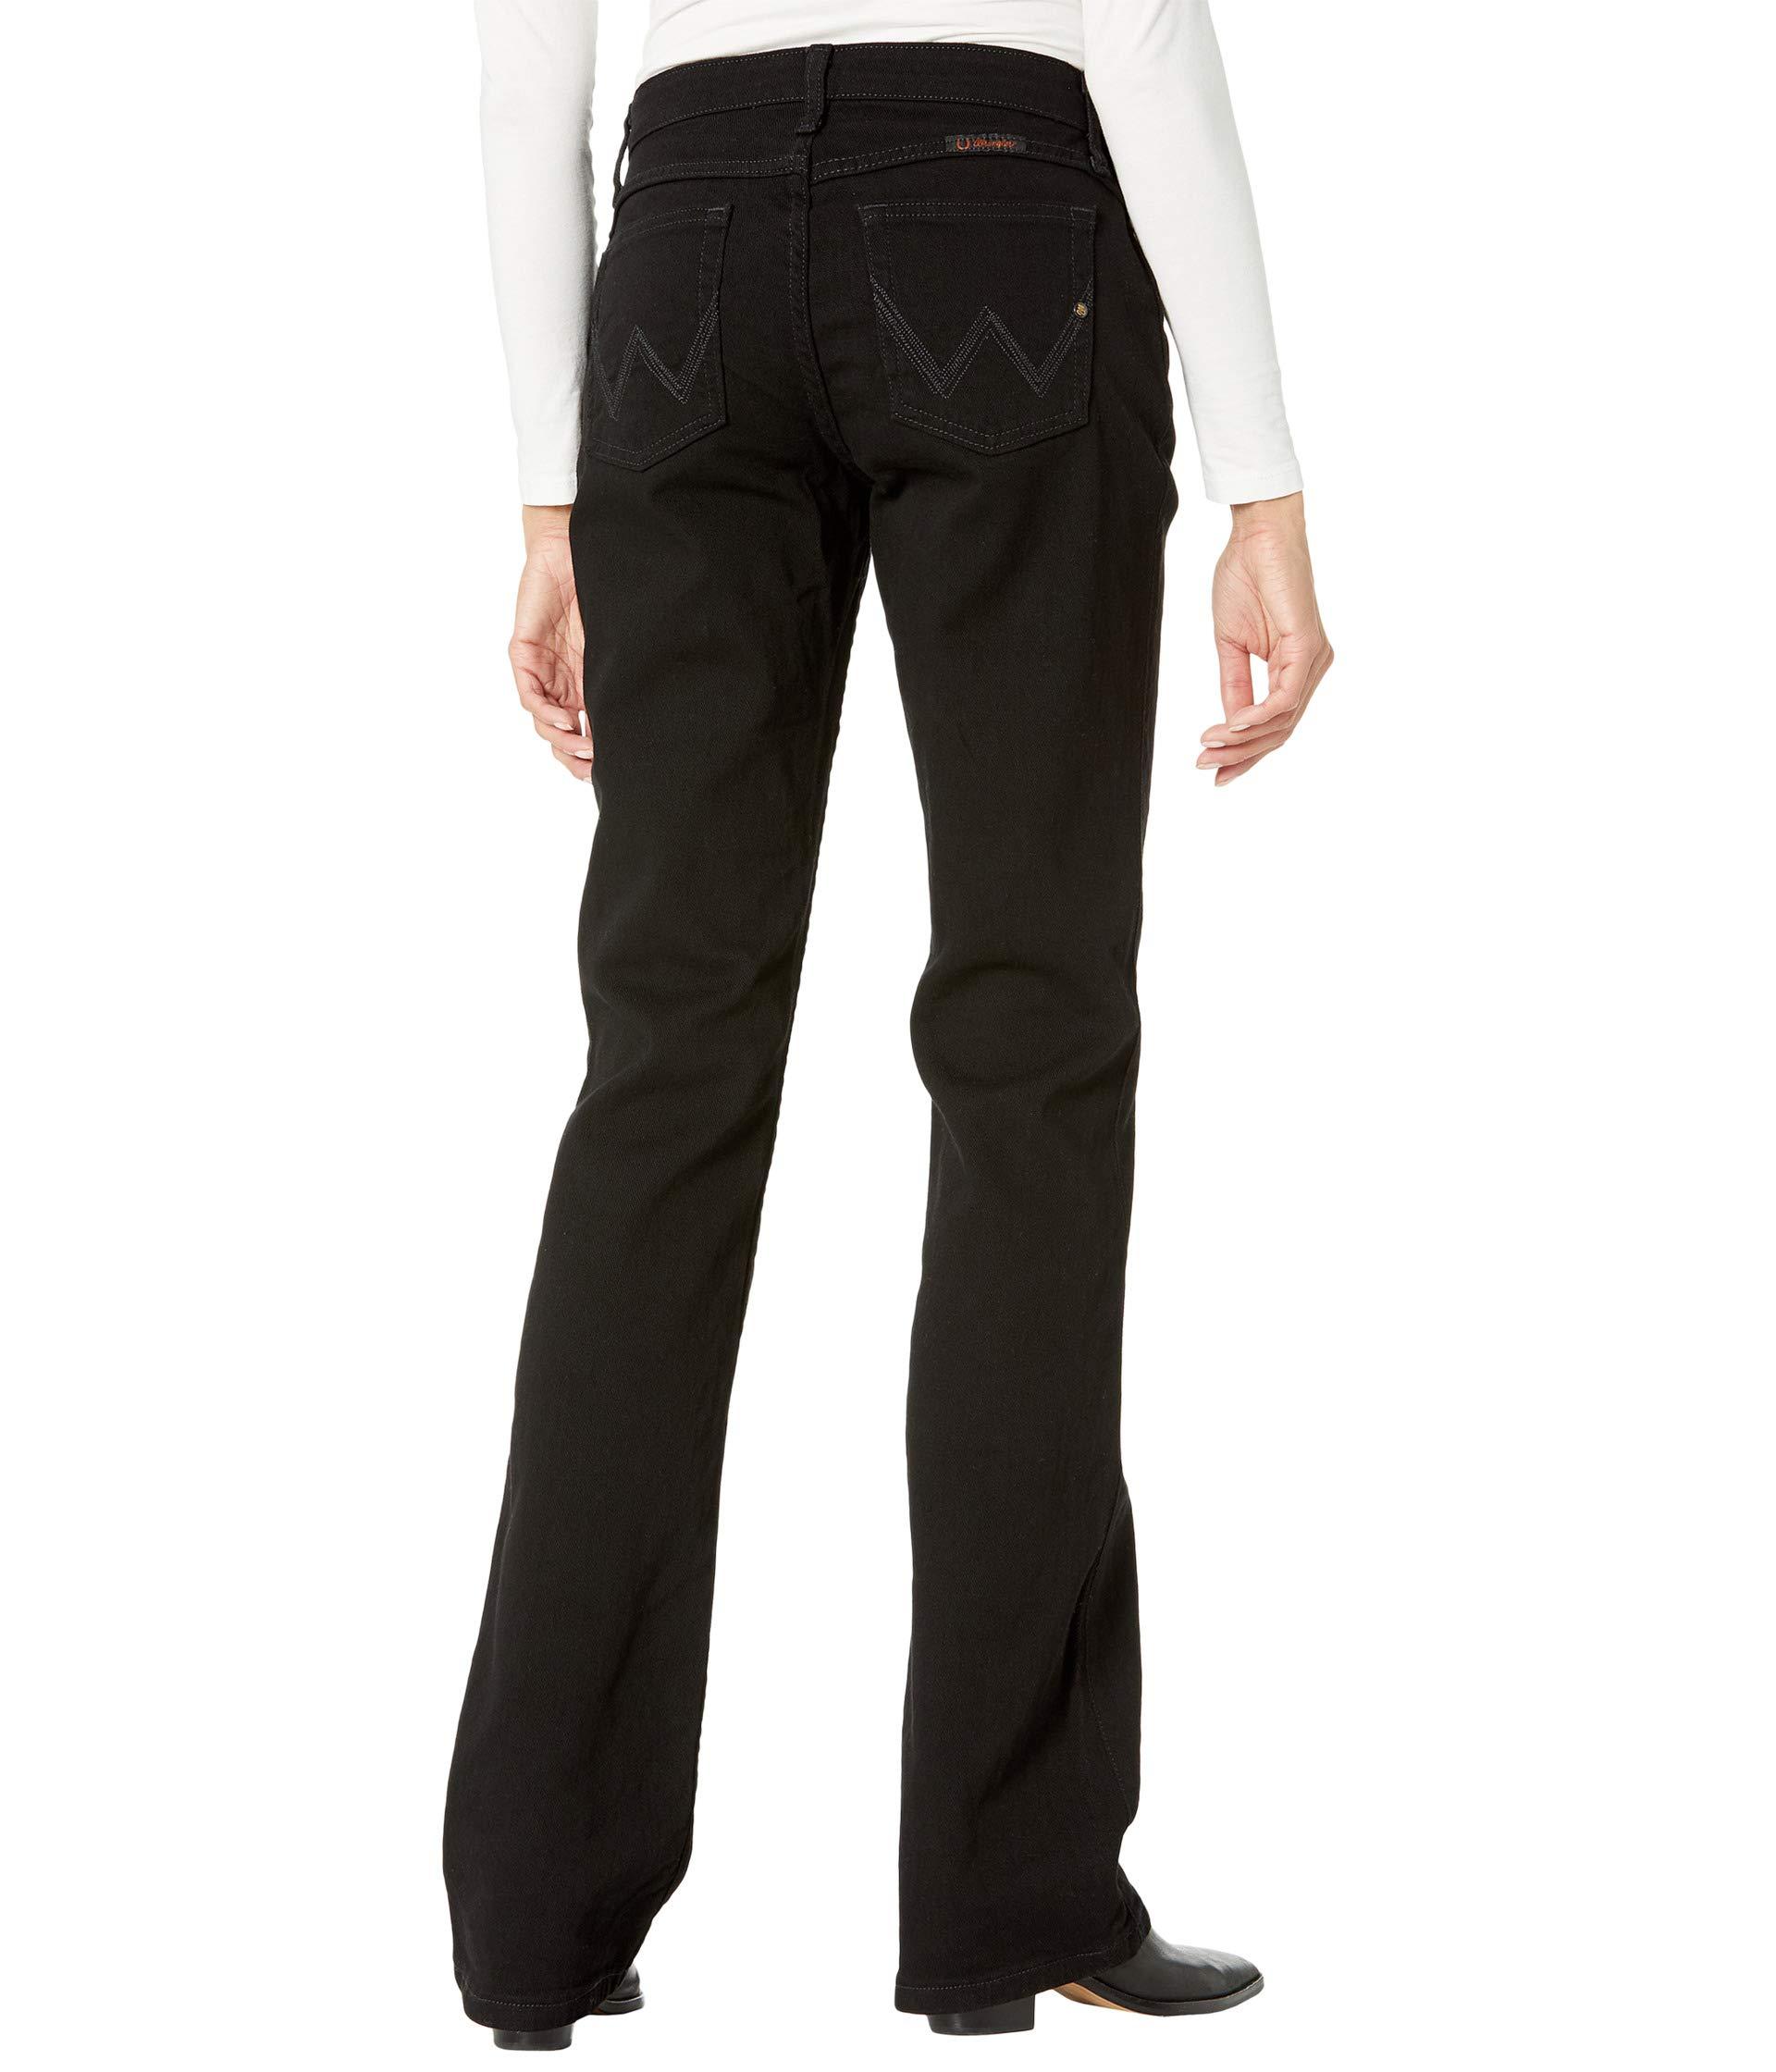 Wrangler Denim Q-baby Mid-rise Bootcut Jeans in Black - Lyst